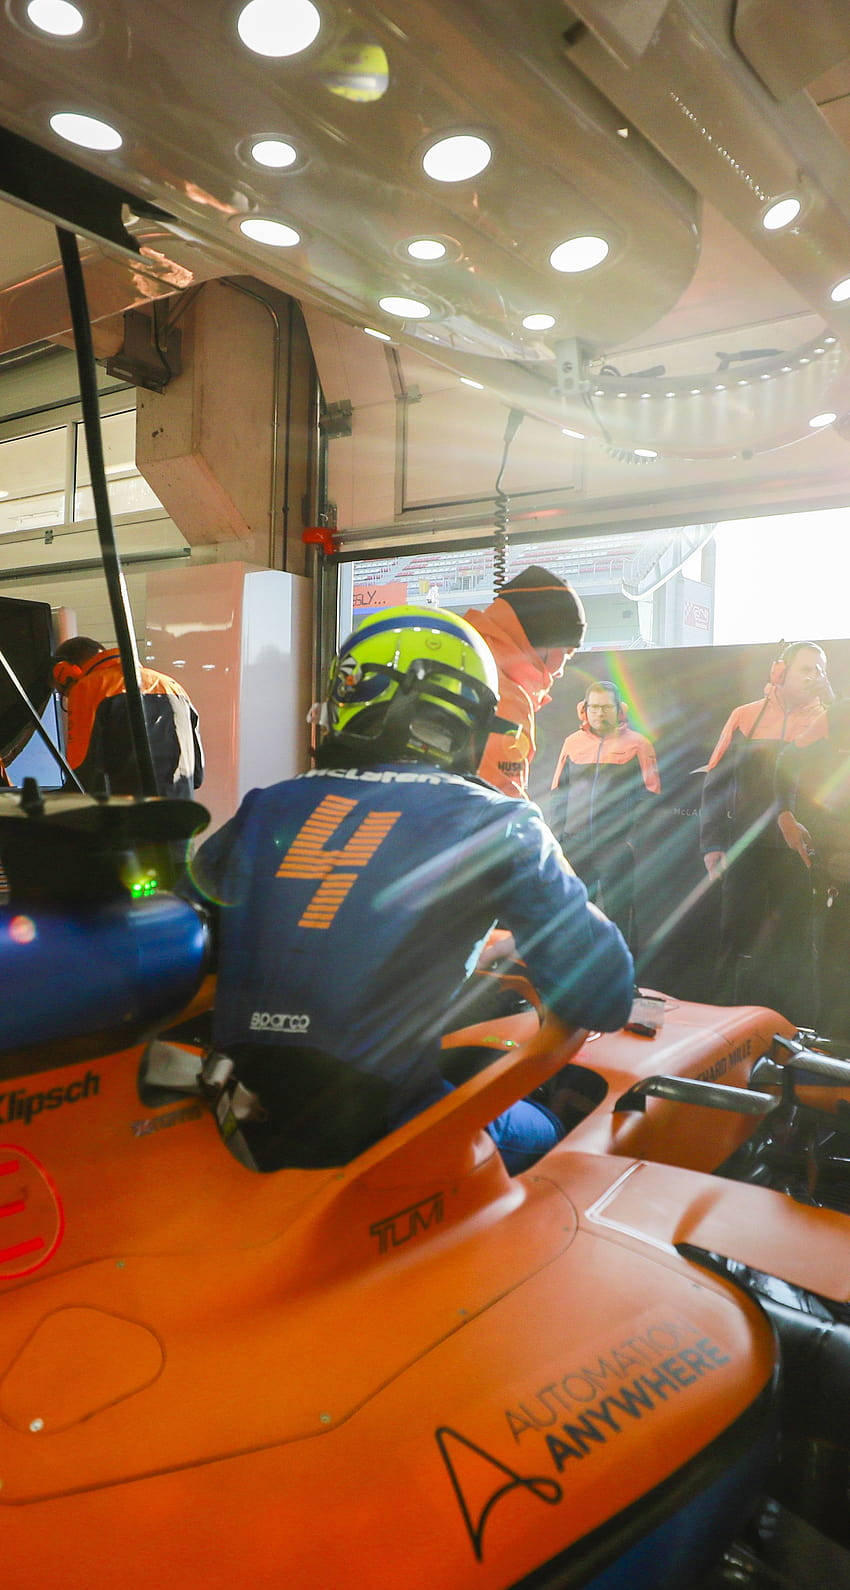 Lando Norris In Mclaren F1- Lando Norris Speeding In His Vibrant Orange Mclaren Formula 1 Car During A Race. Wallpaper